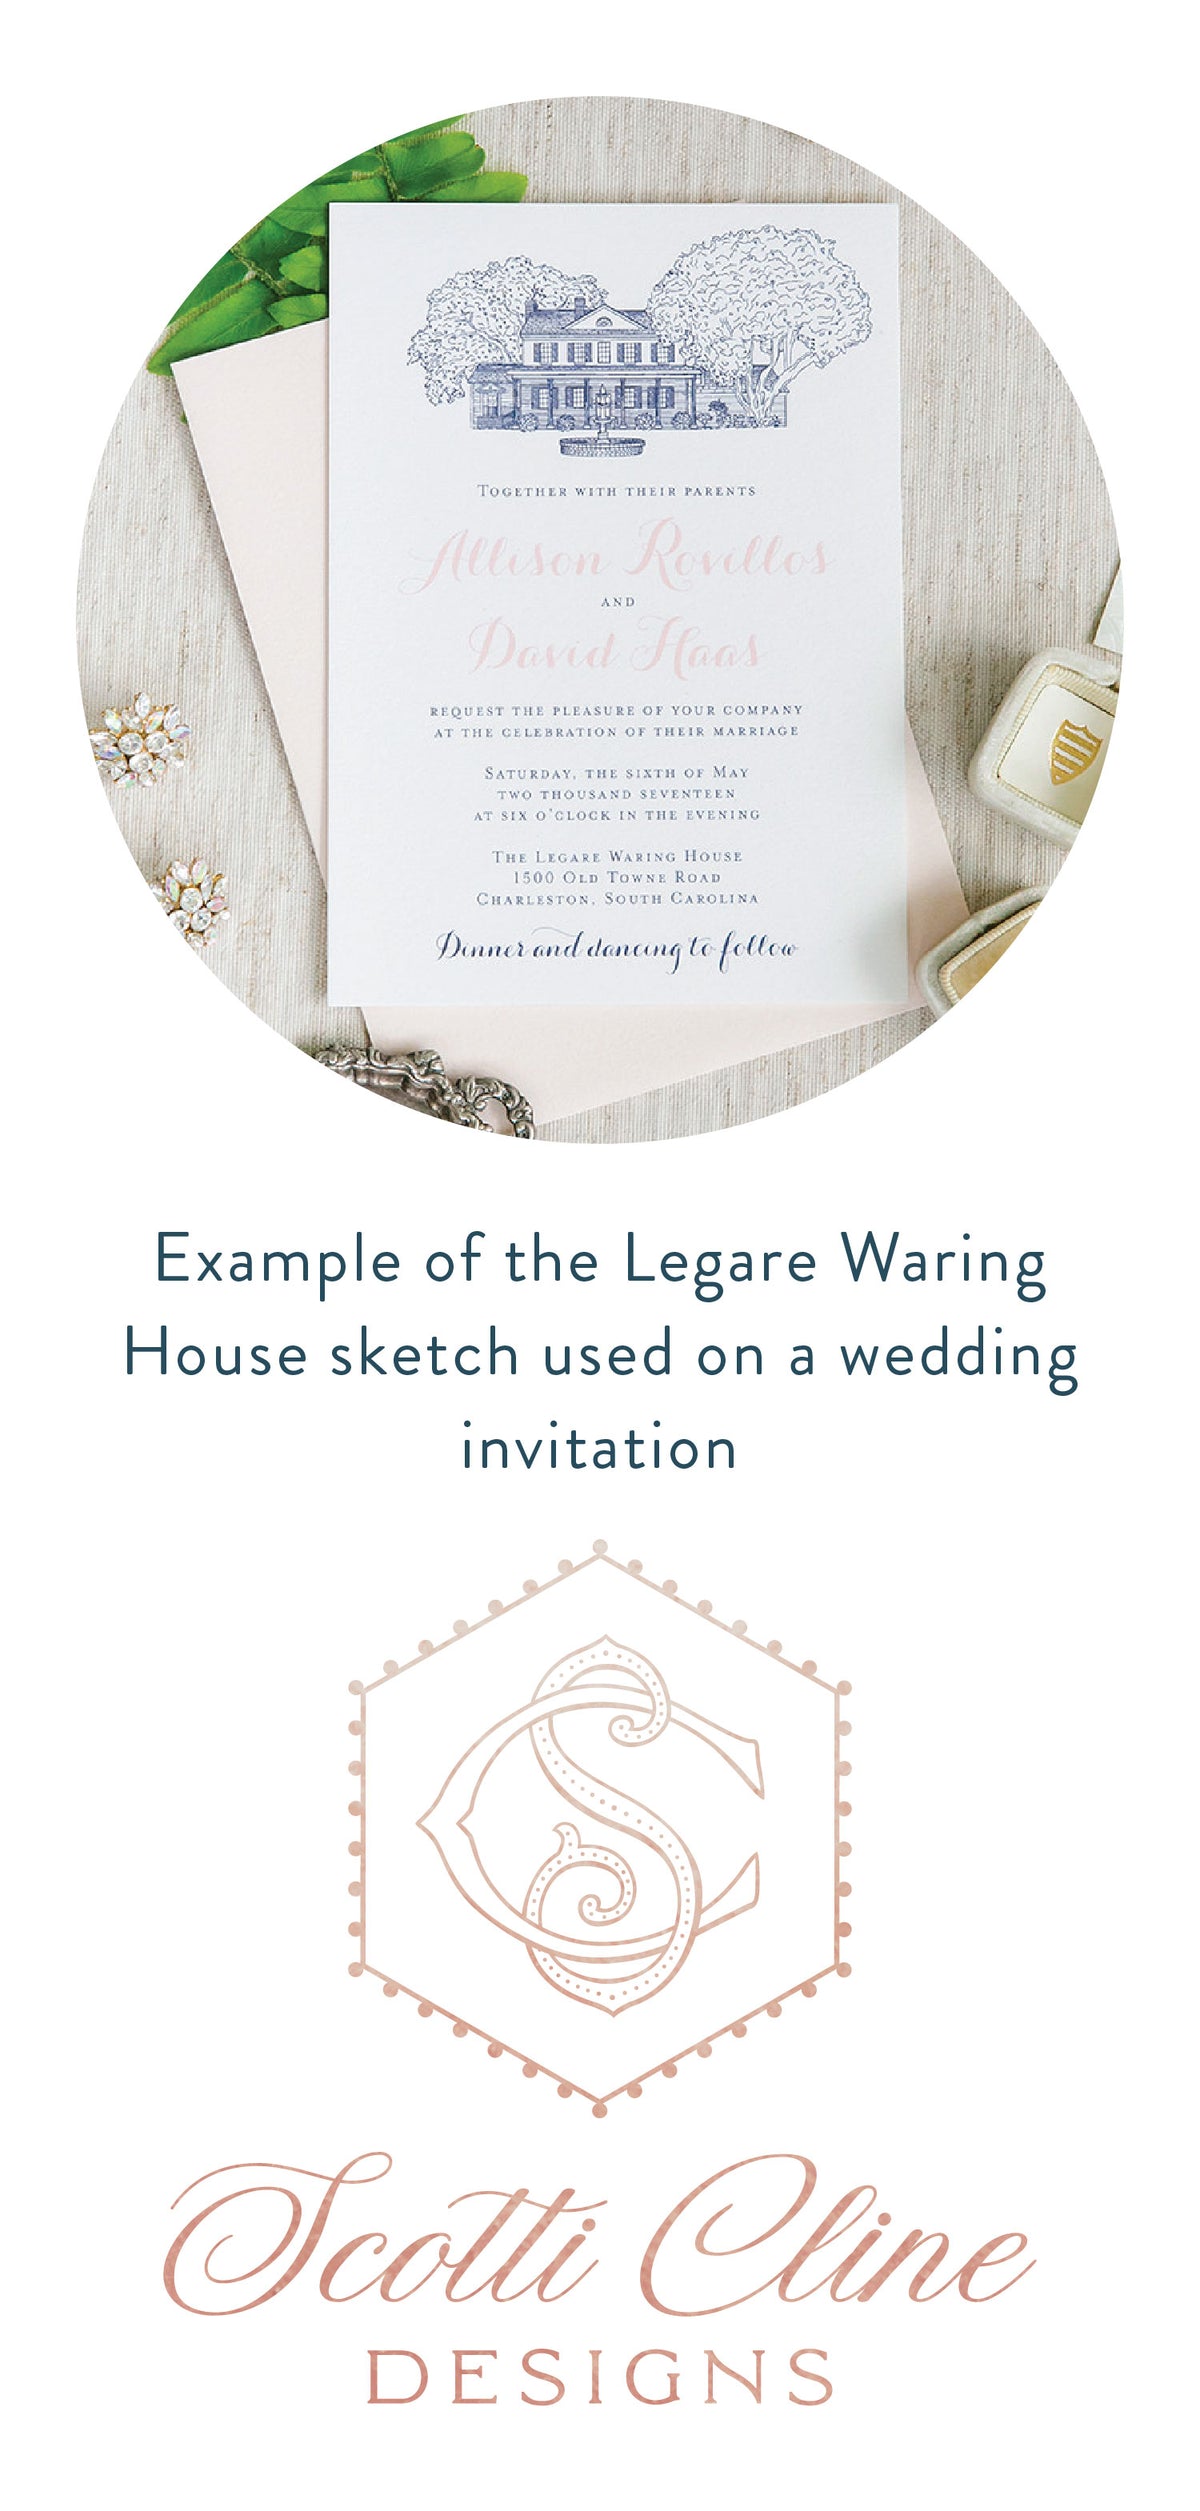 Legare Waring House Sketch Digital File